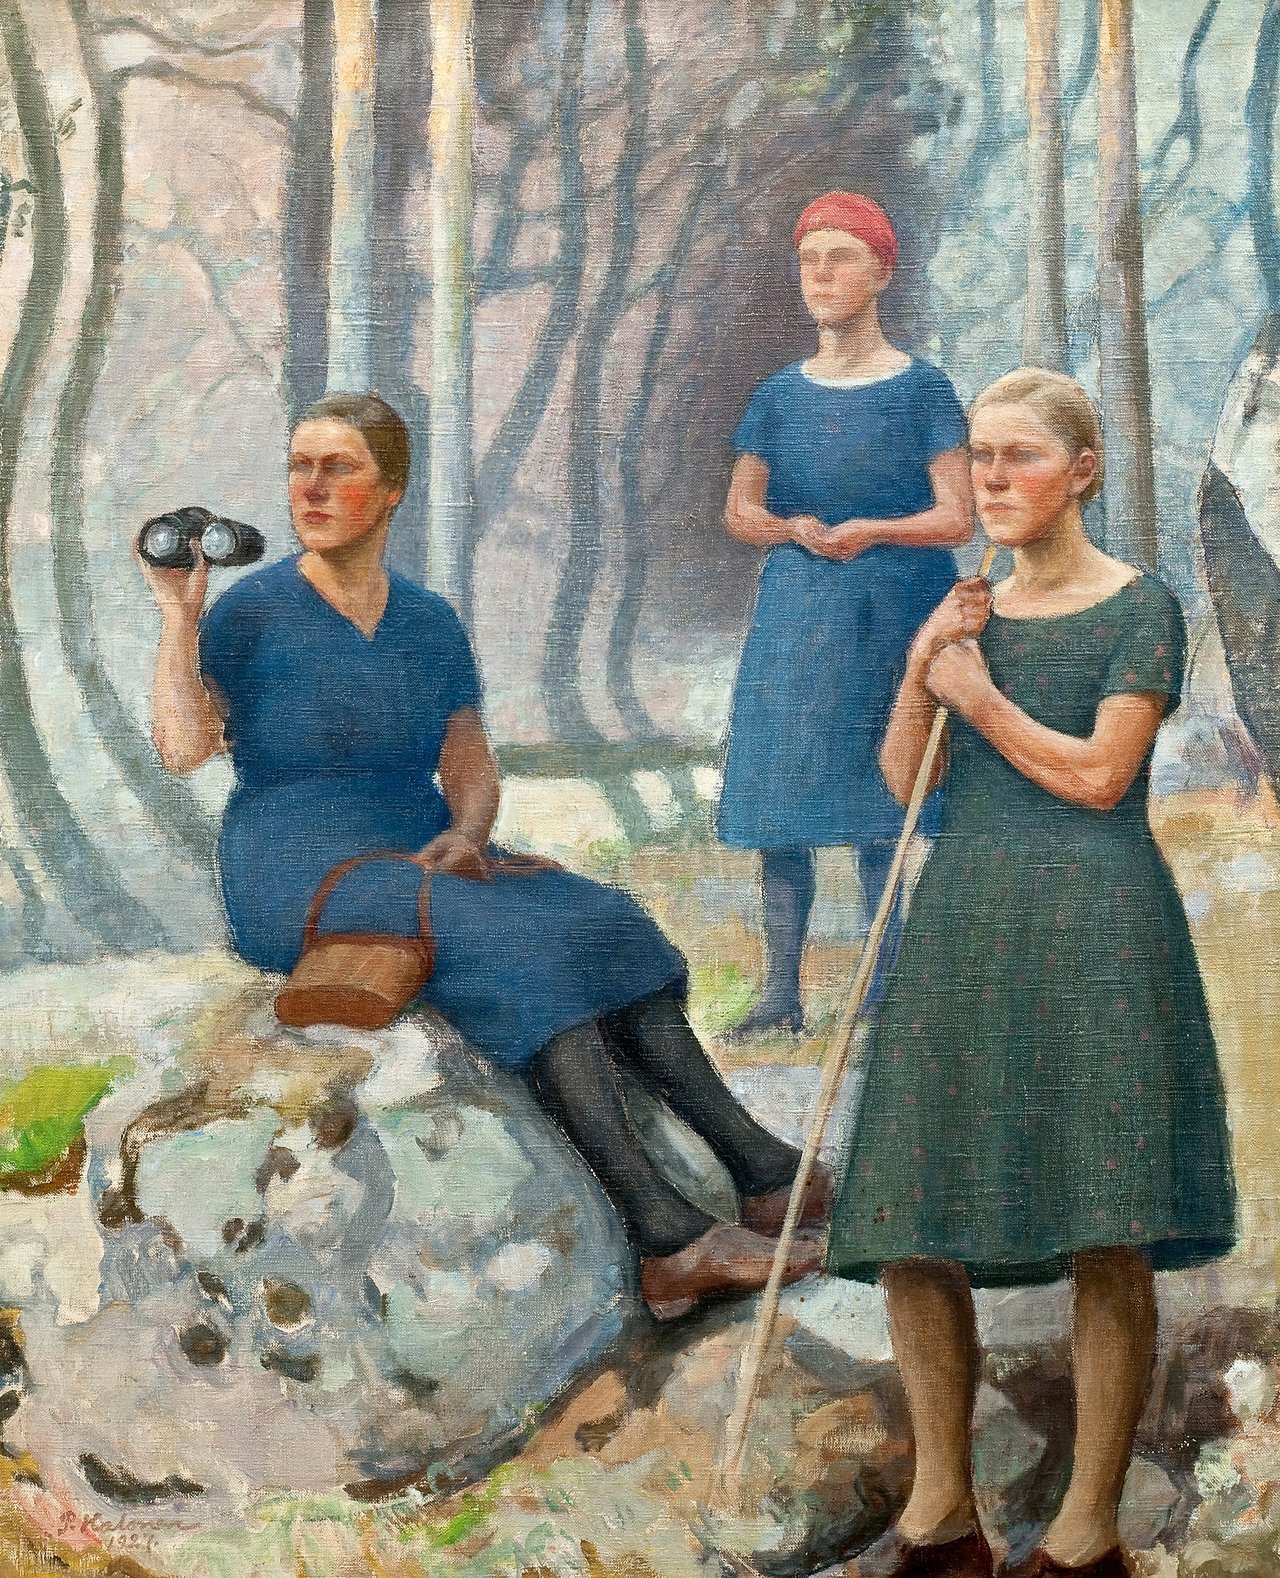 huariqueje:
“ Girls on the Trip - Pekka Halonen
Finnish, 1865-1933
Oil on canvas, 102 x 81 cm.
”